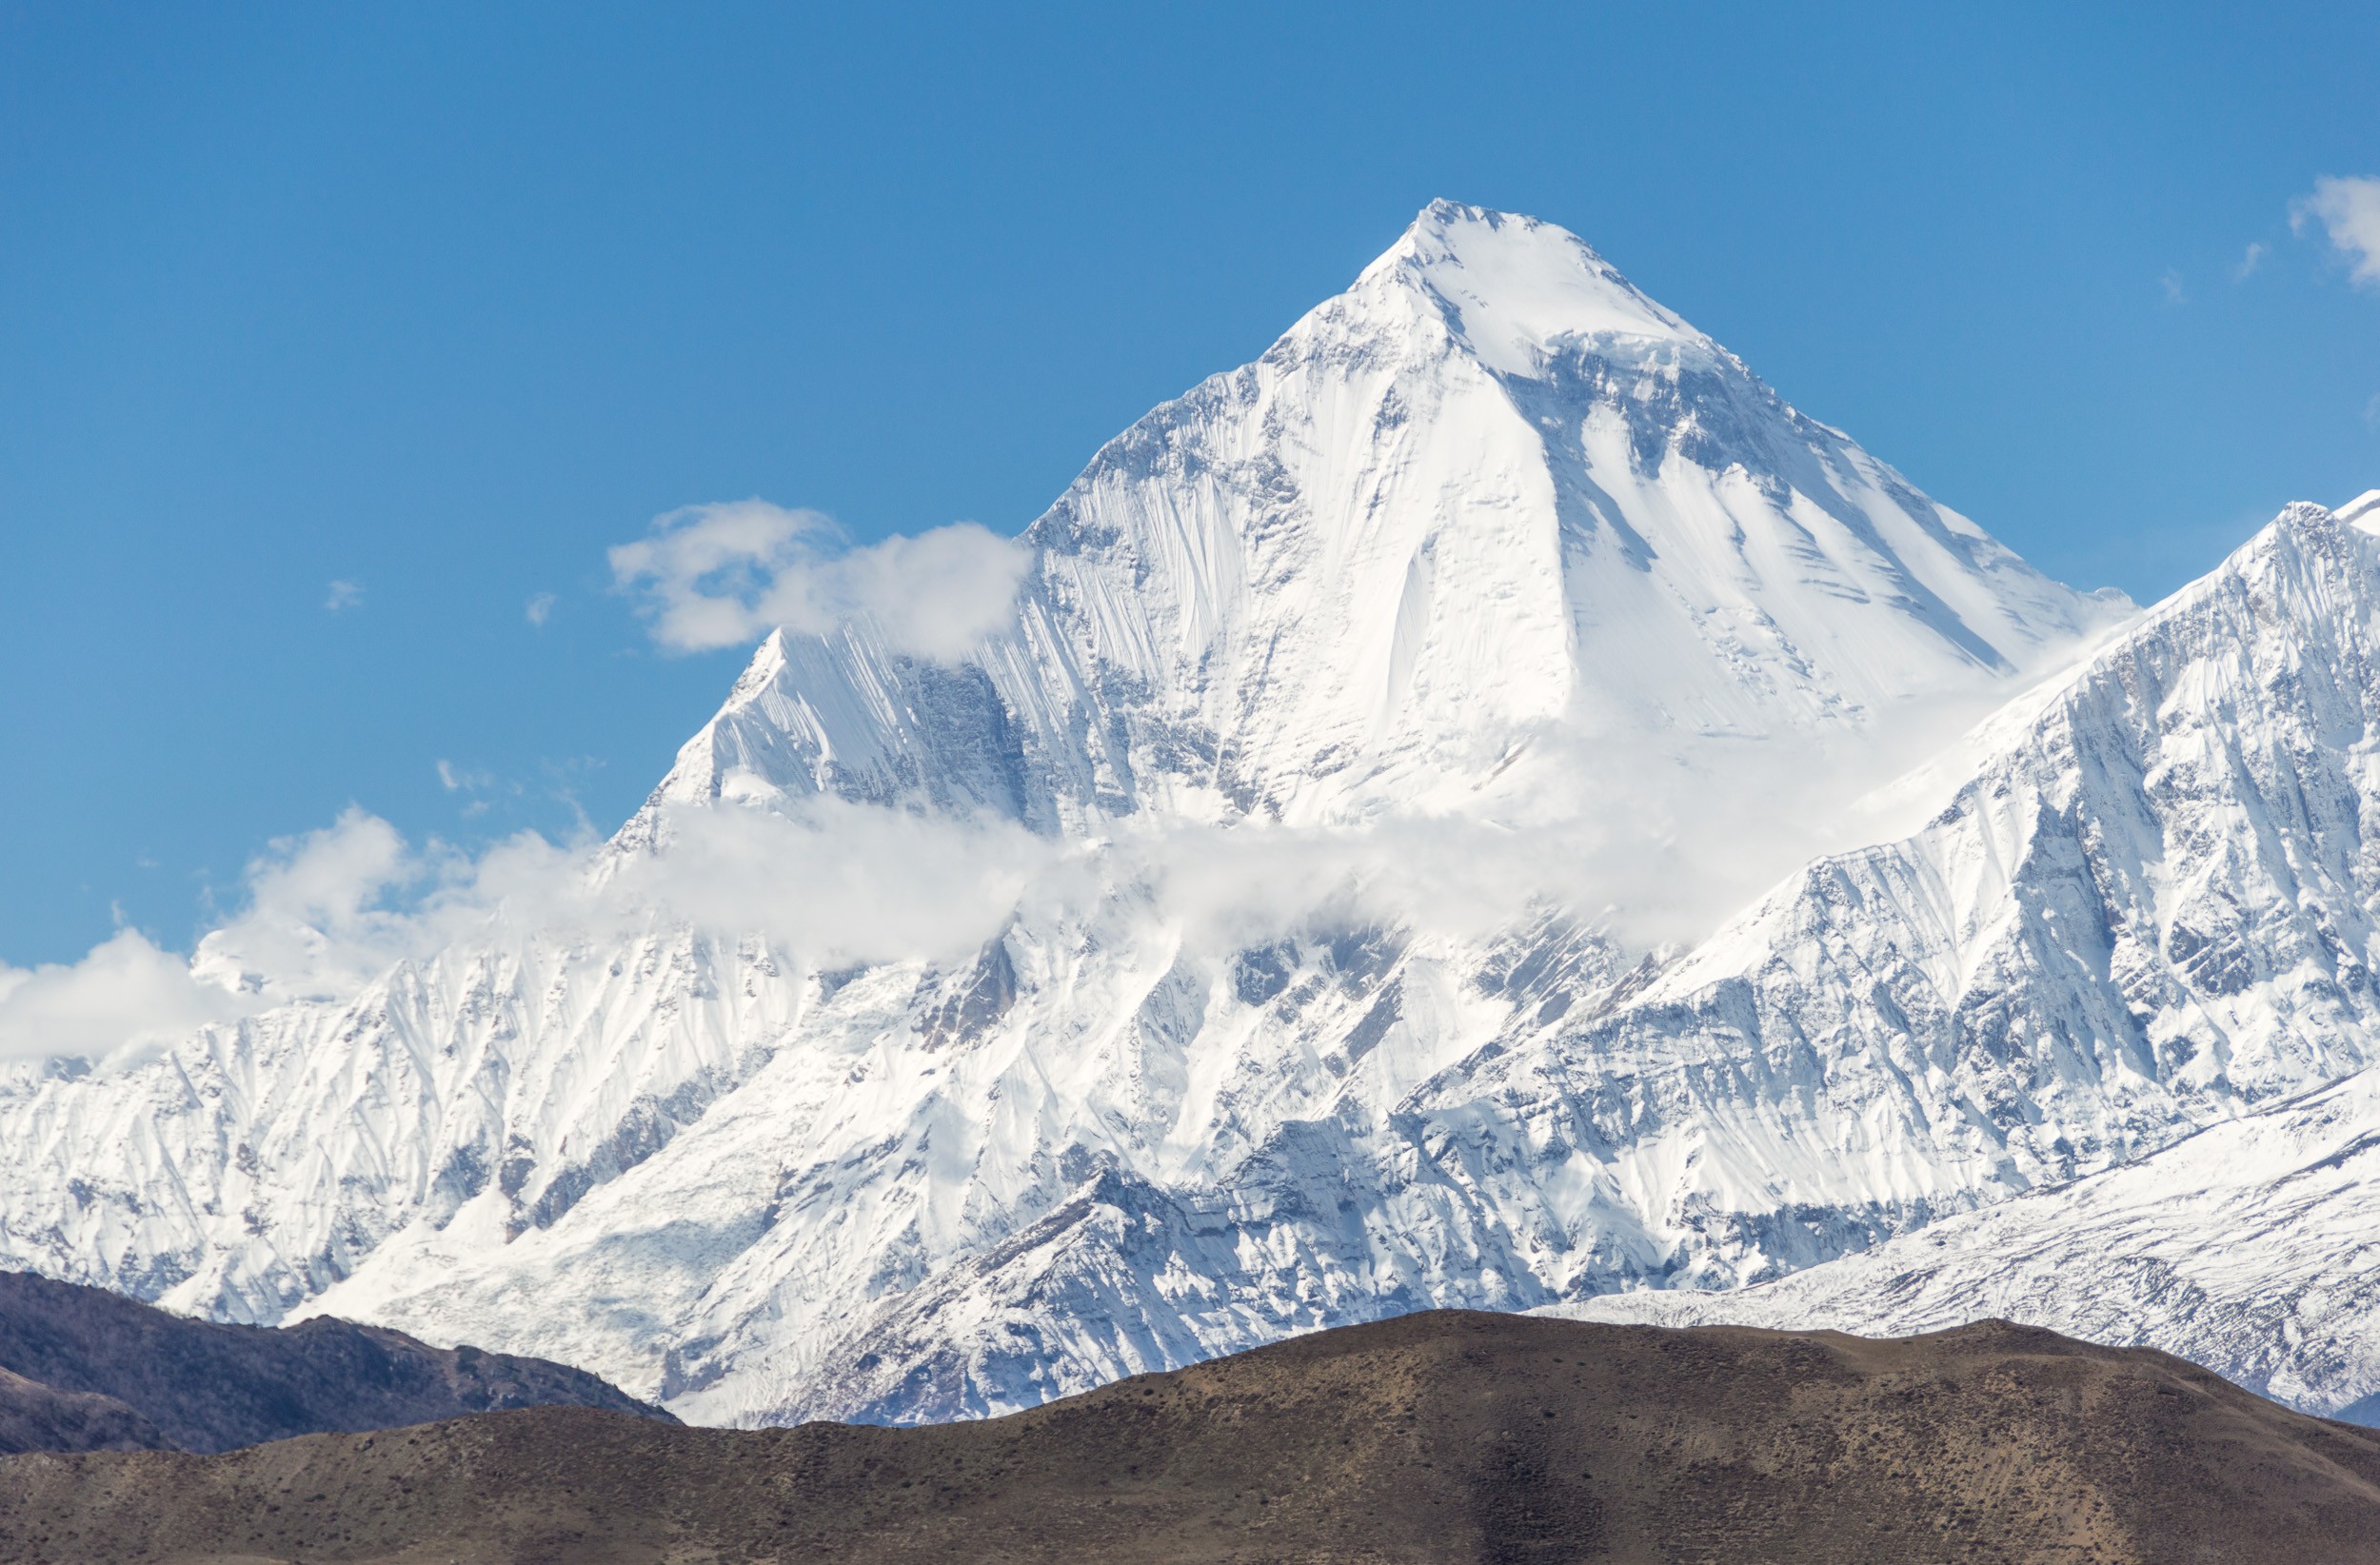 Dhaulagiri Circuit Trek: a Demanding Trek to the Stunning Mountain